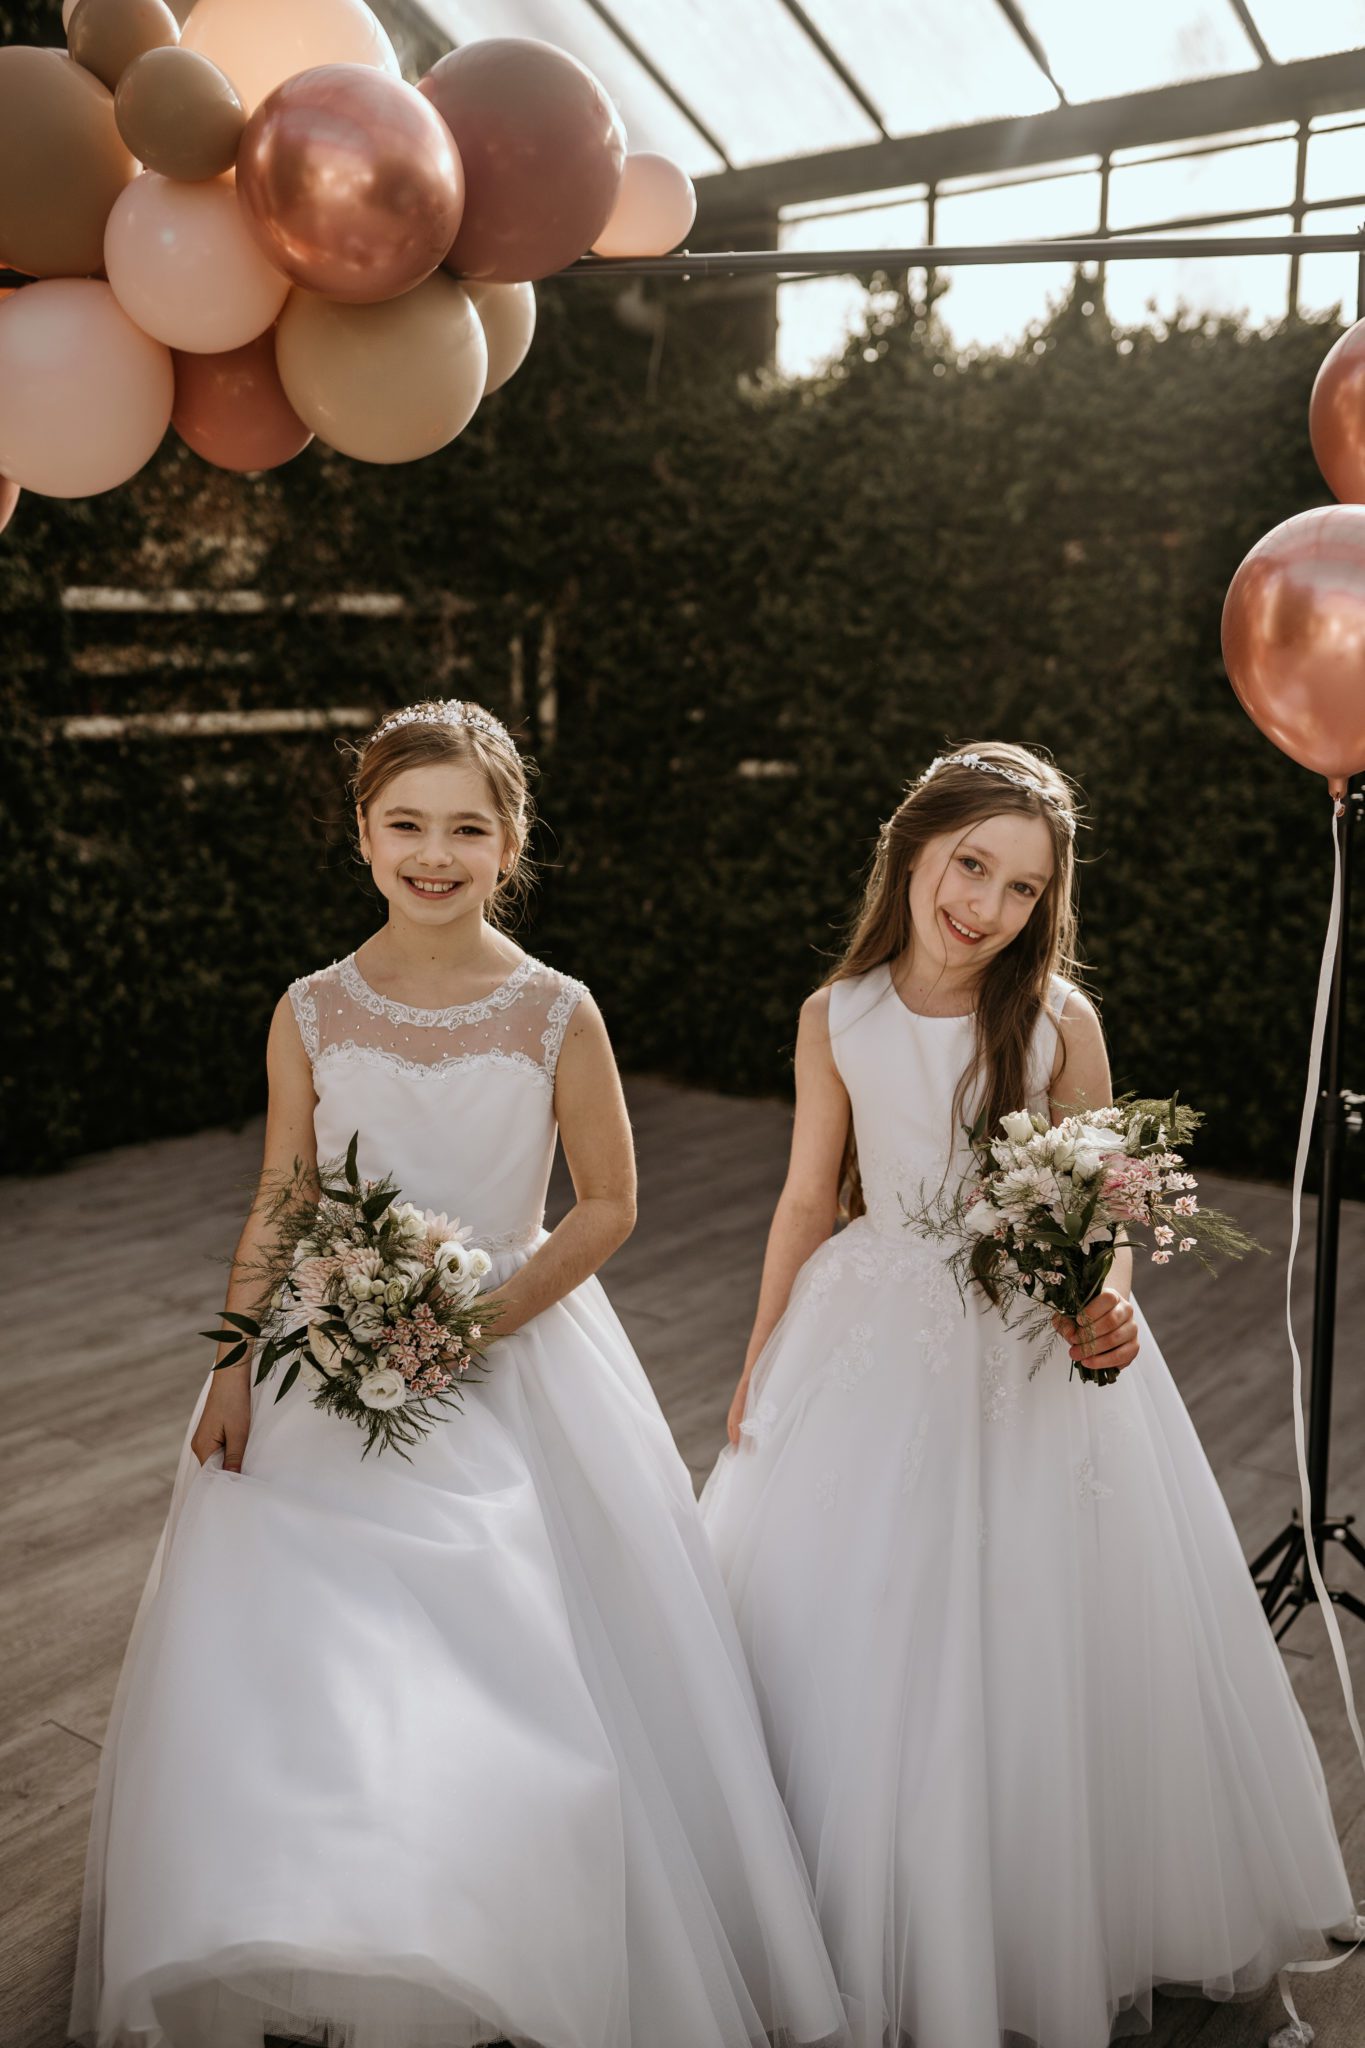 Two little girls in white dress